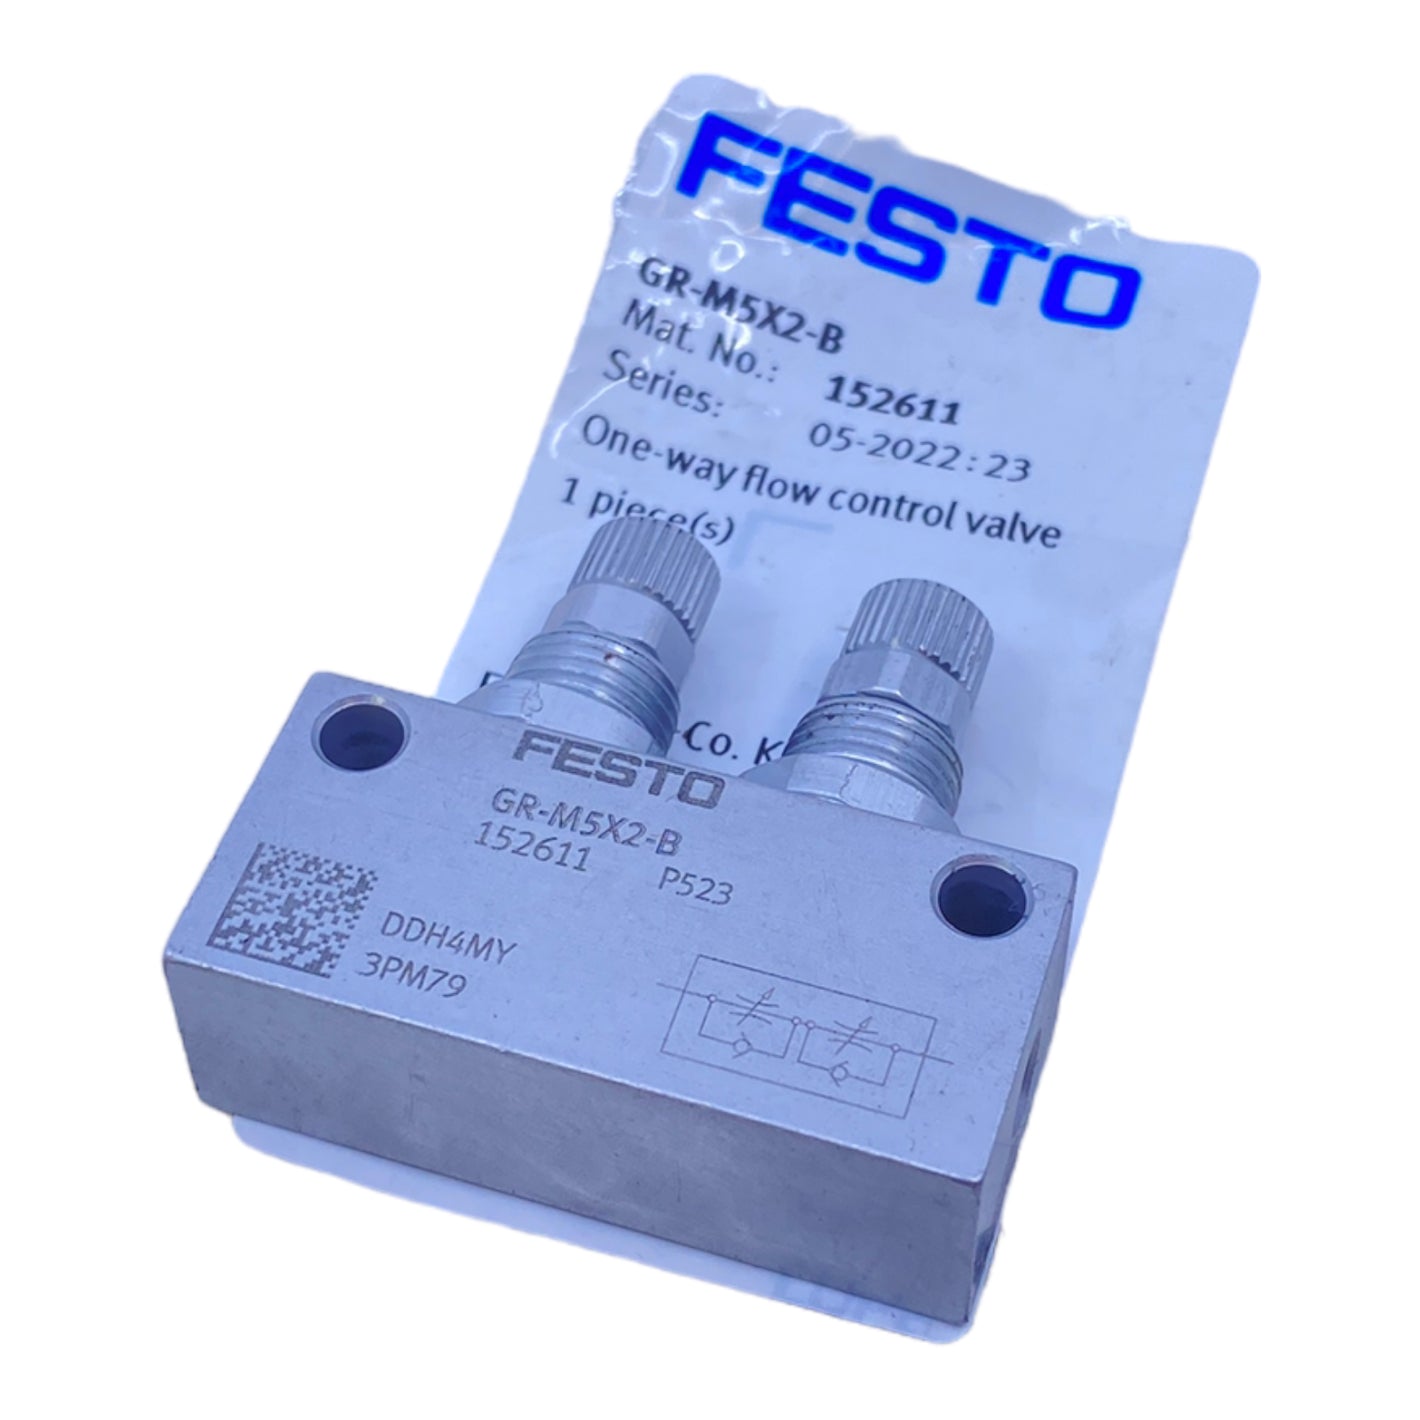 Festo GR-M5X2-B Drossel-Rückschlagventil 152611 0,5 bis 10 bar